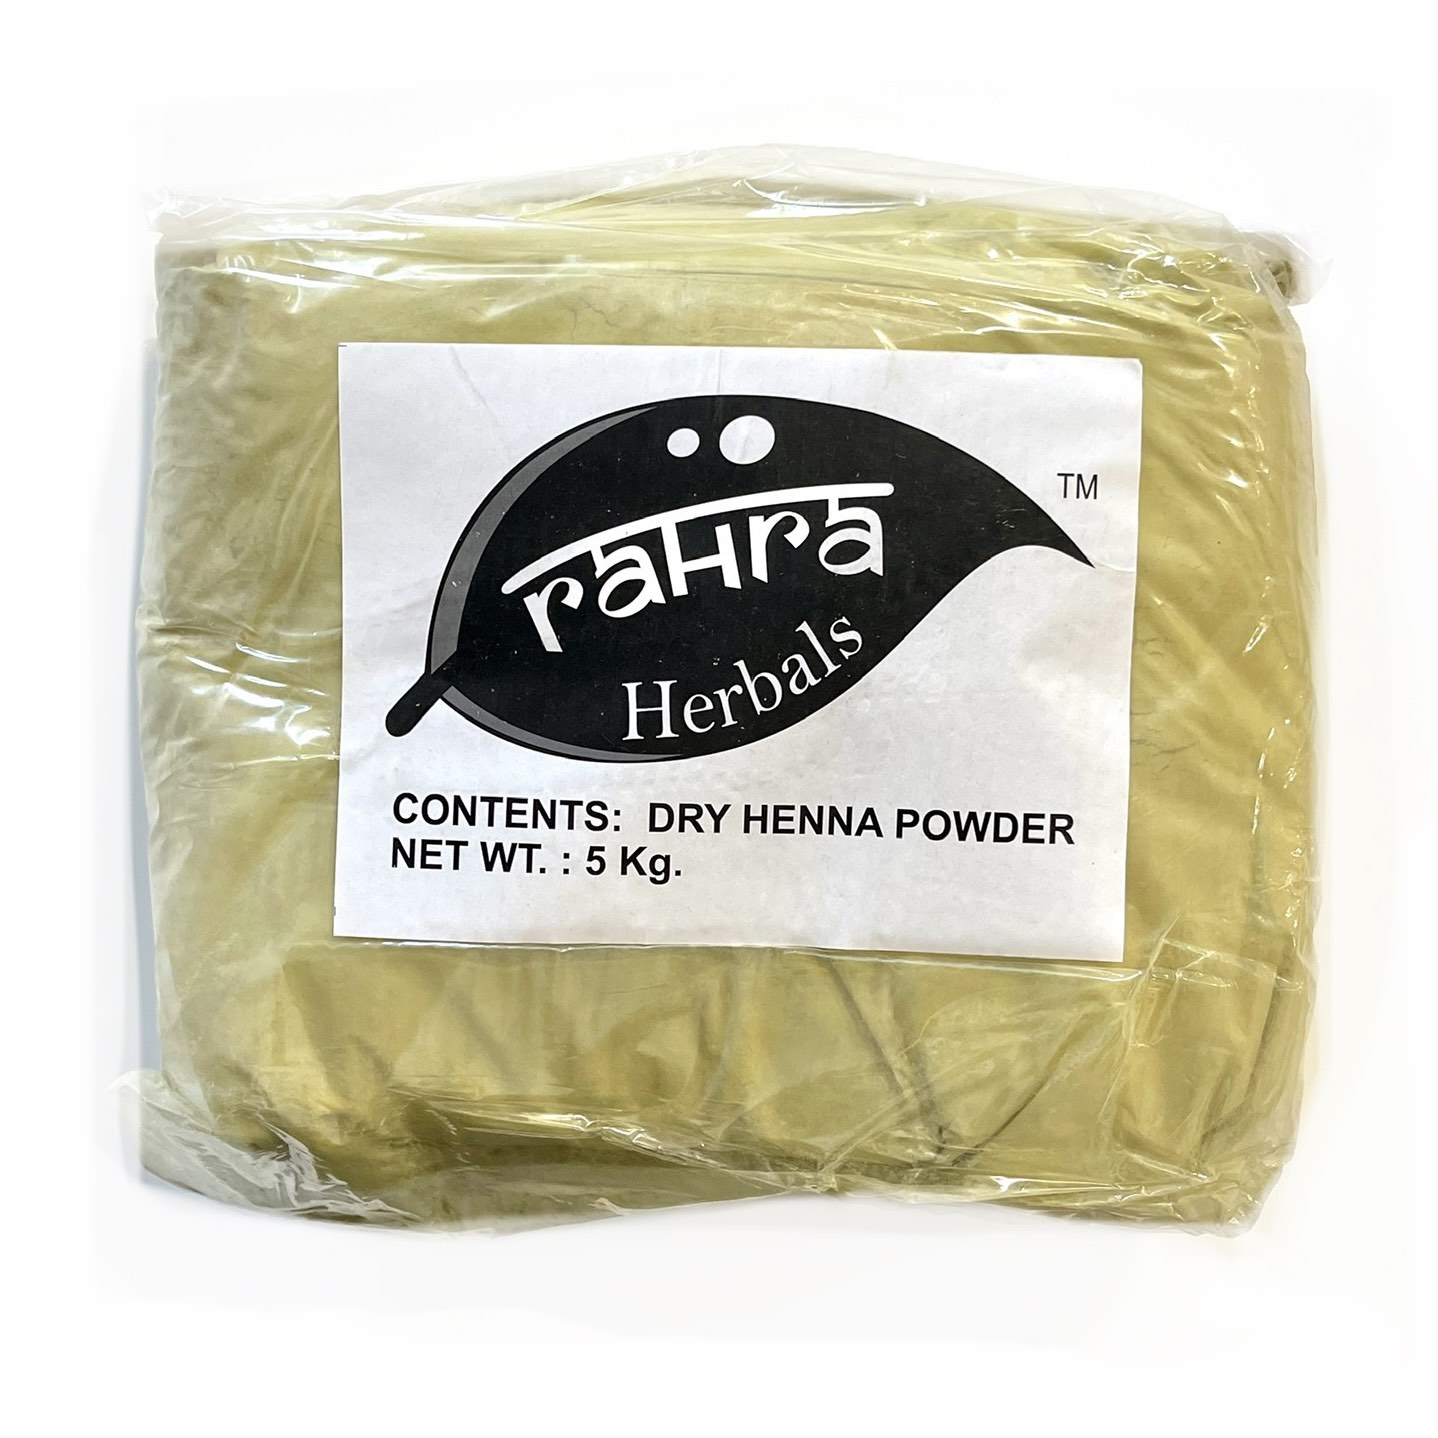 DRY HENNA POWDER, Ганга Herbals (Порошок хны для мехенди, Нэха Хербалс), 5 кг.